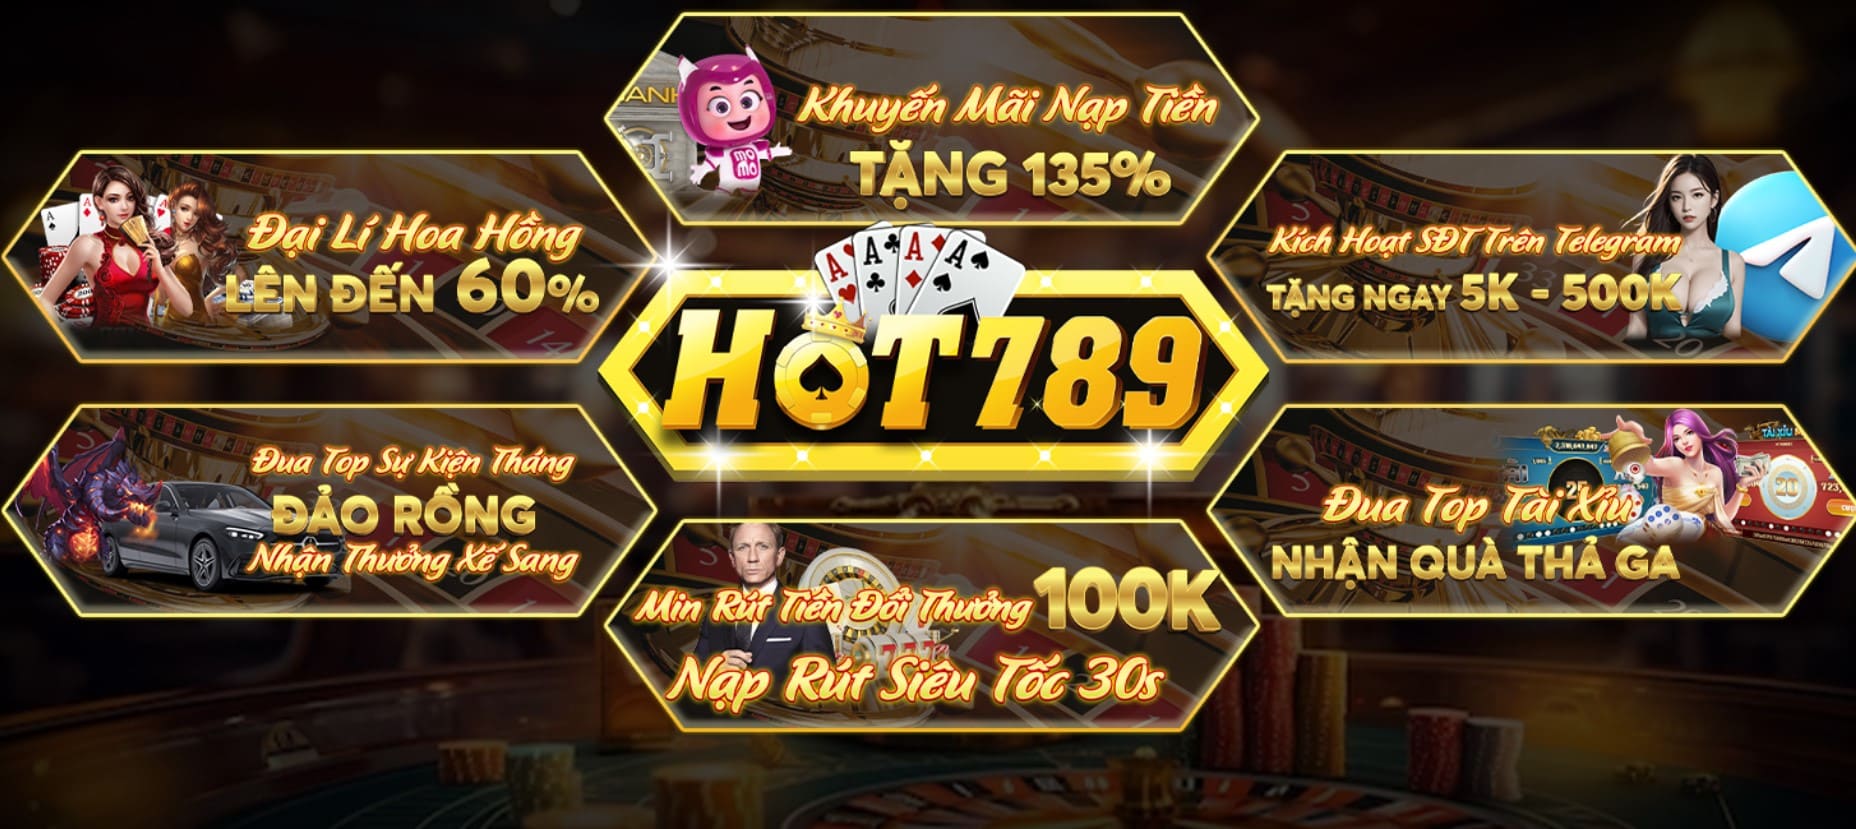 hot789 vip game bai tai loc dang ky hot789vip 50k